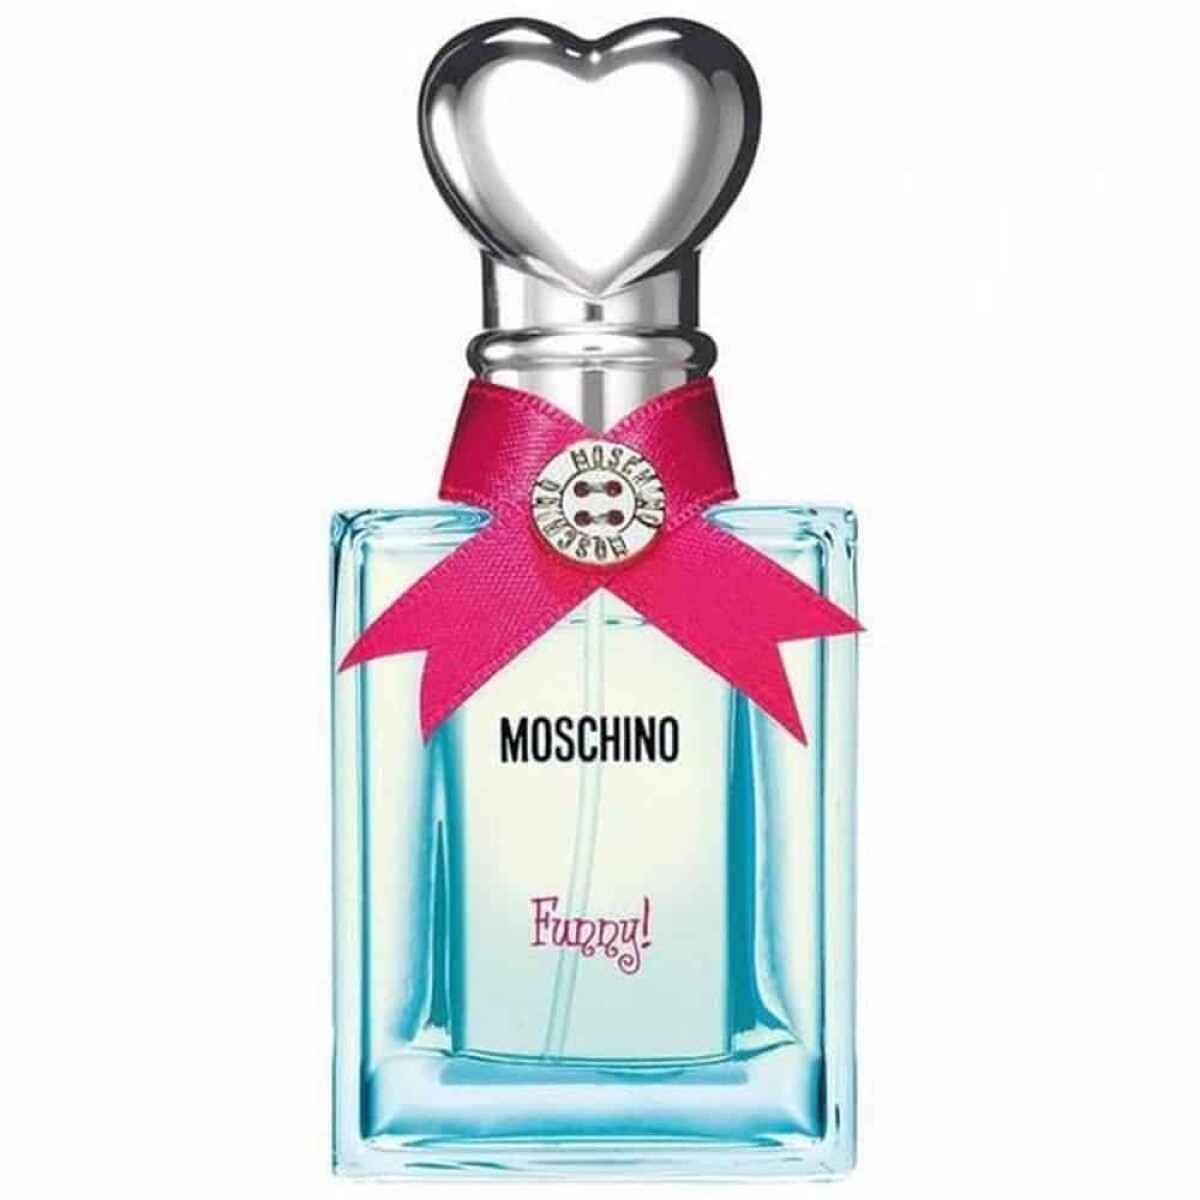 Perfume Moschino Funny! Edt 50 ml 